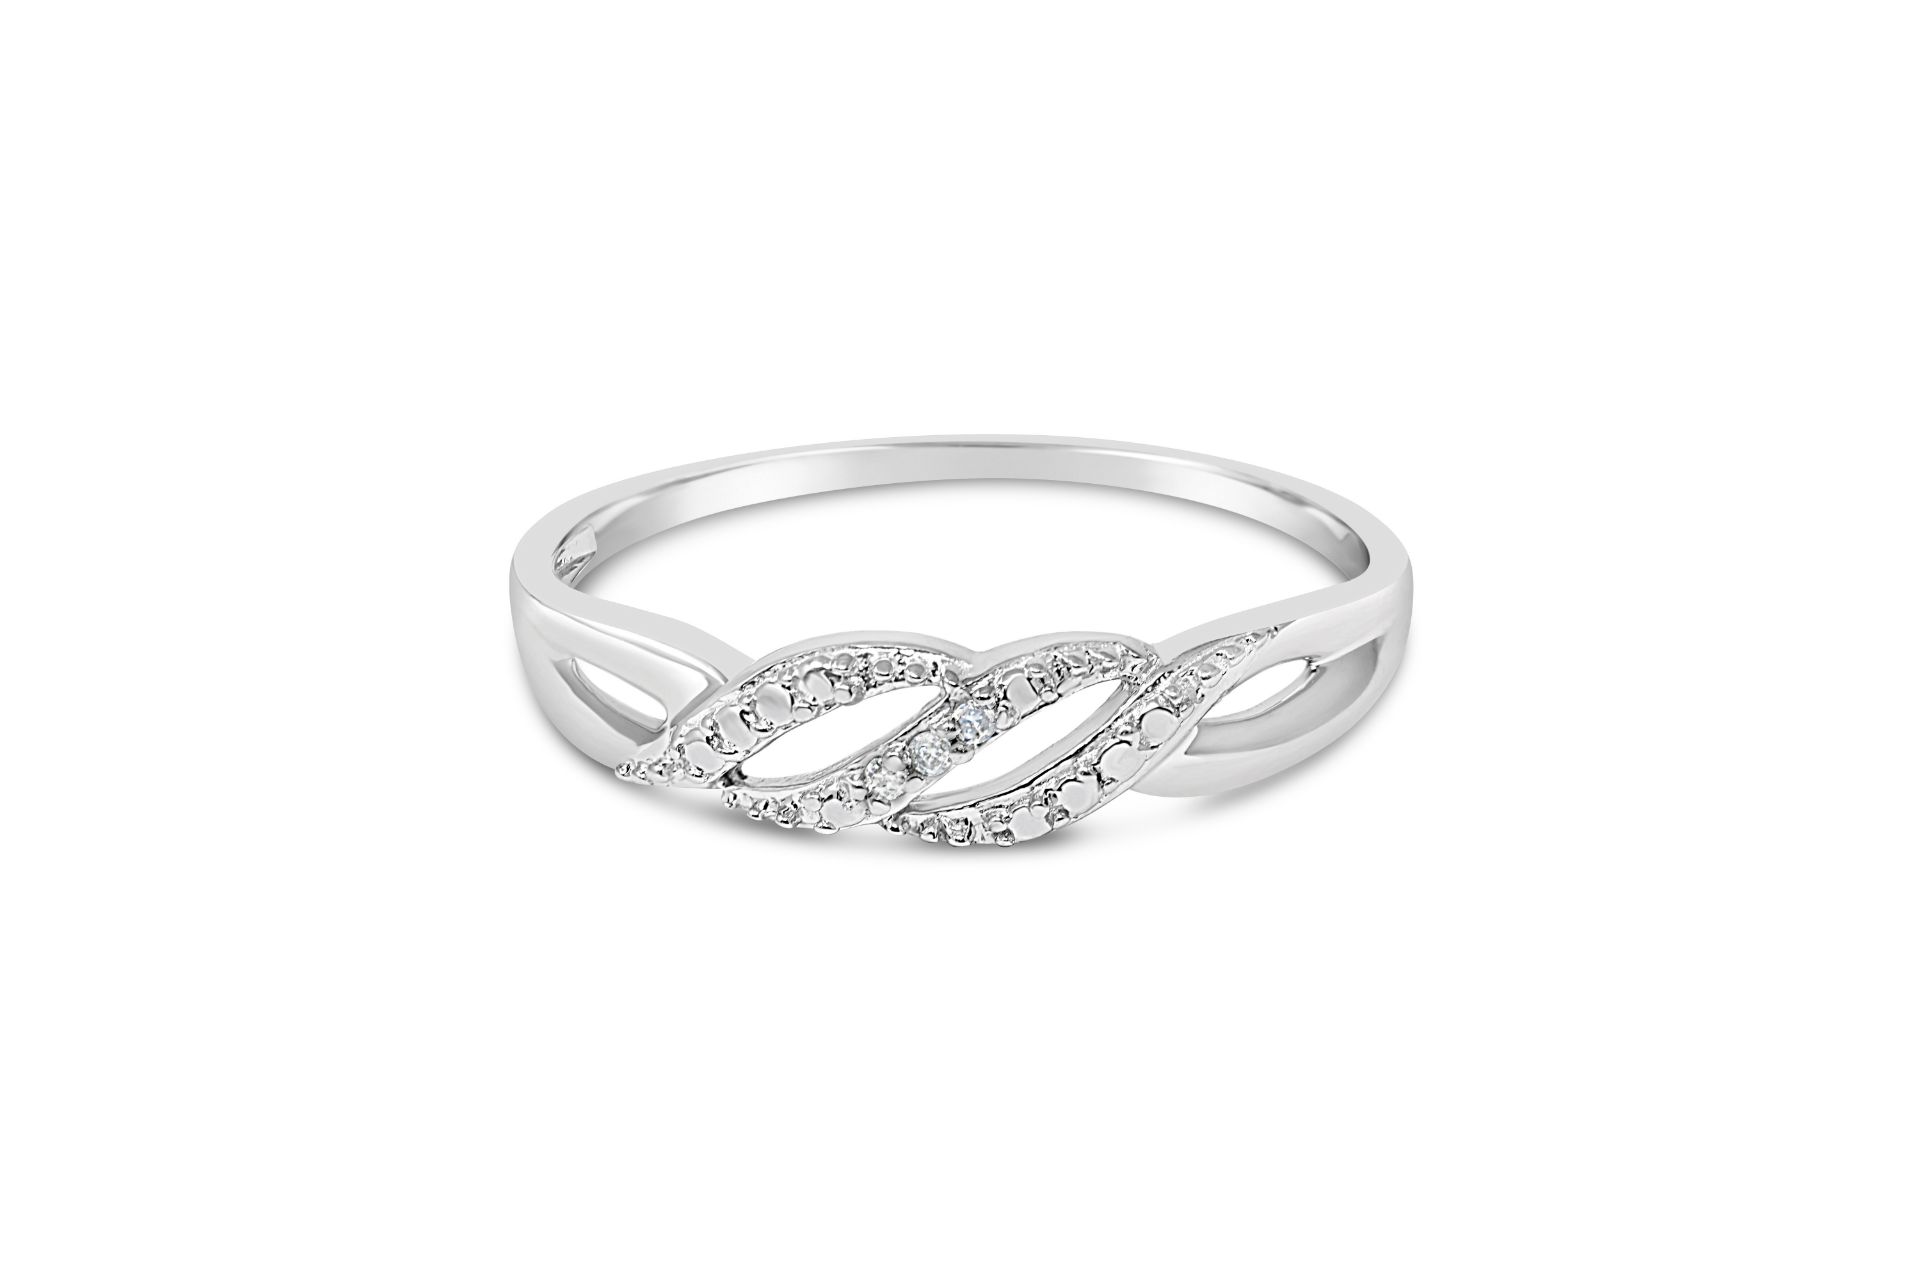 9K White Gold Diamond Ring RRP £315 Size L